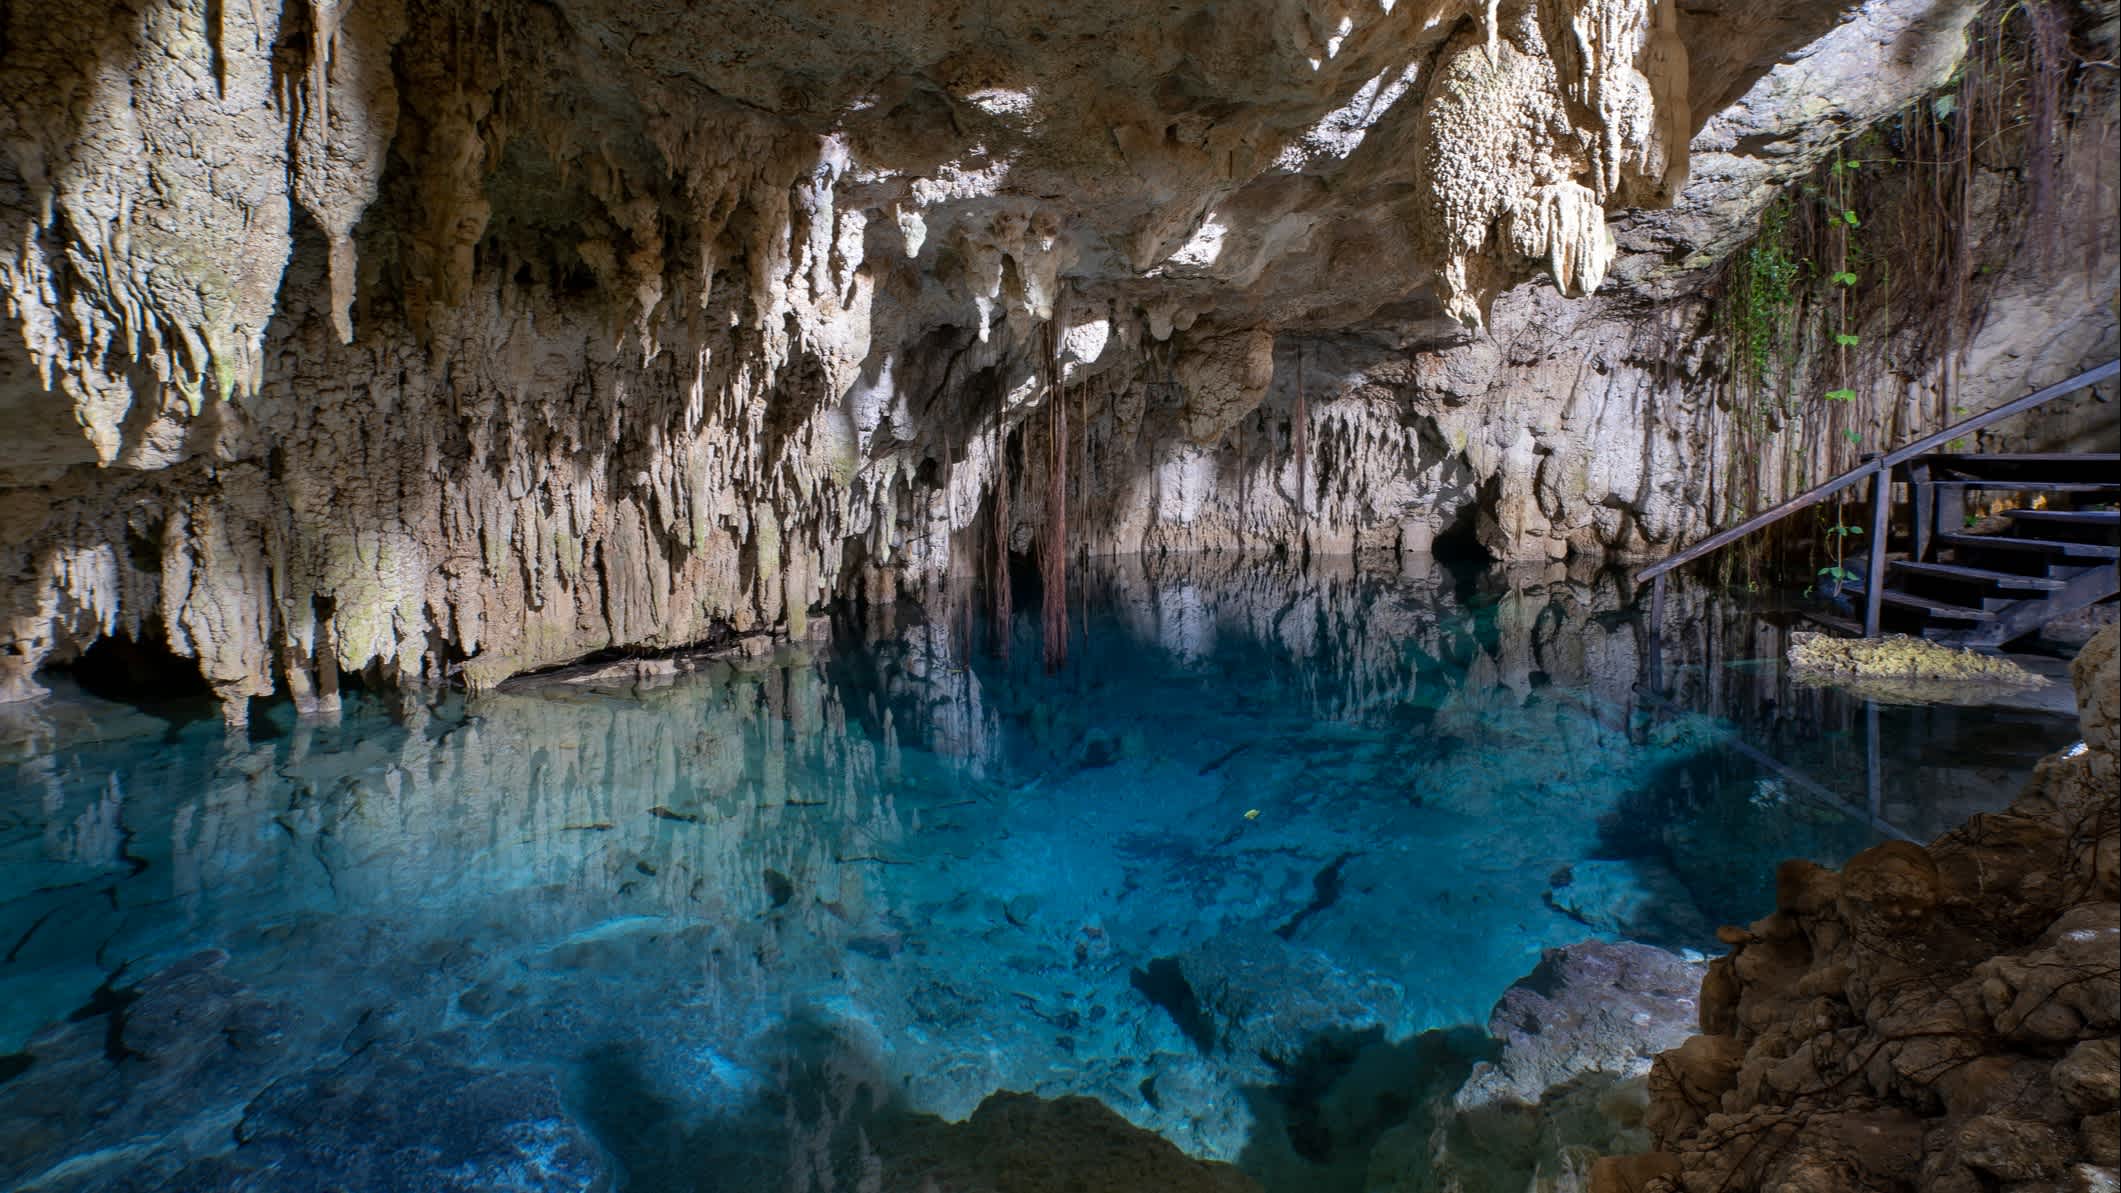 Höhlensystem Río Secreto, Yucatan Penisula, Mexiko

